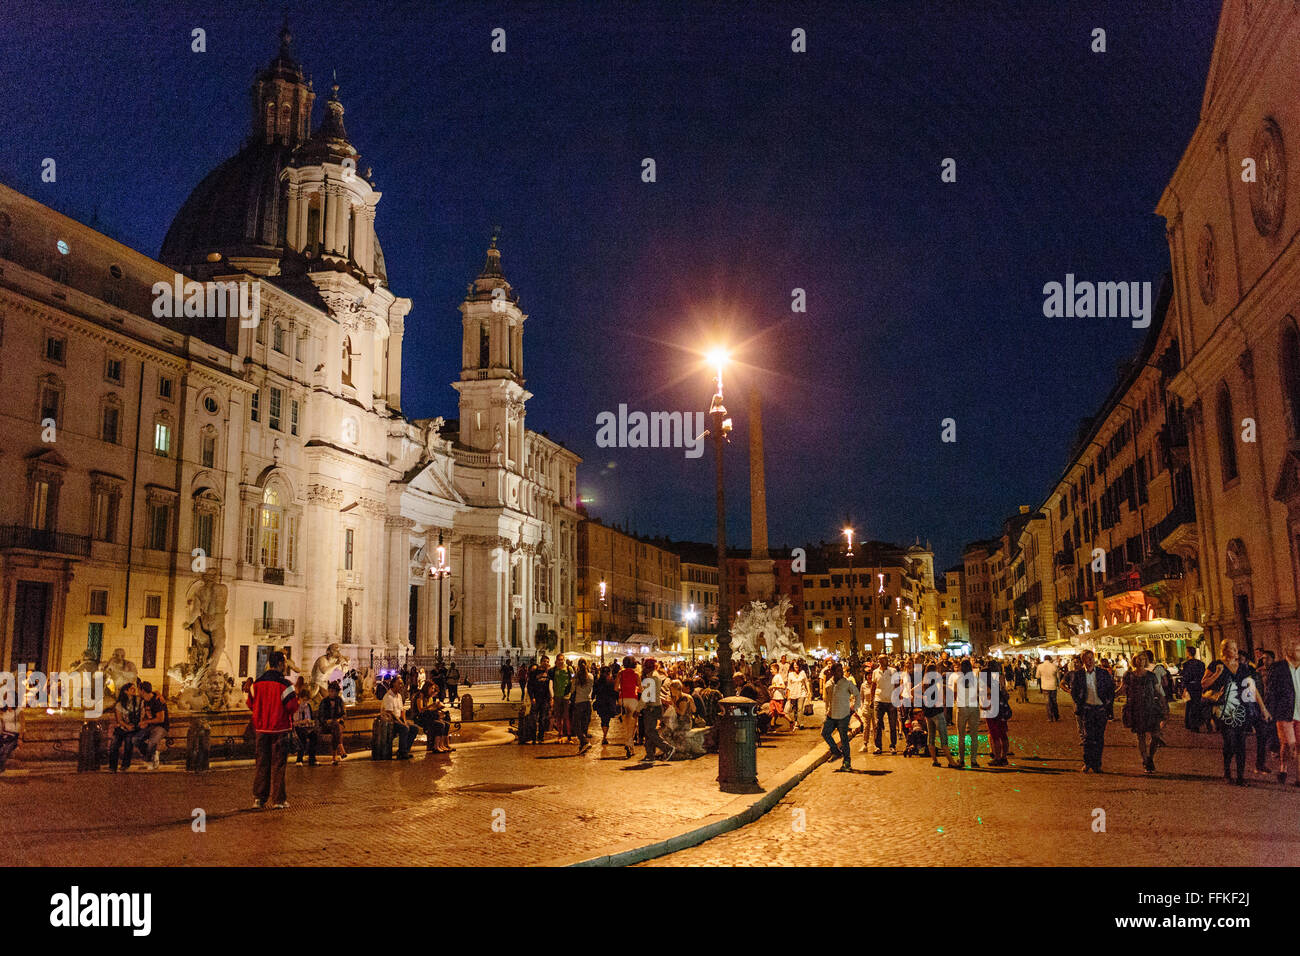 Piazza Navona, Rome, Italy at night Stock Photo - Alamy